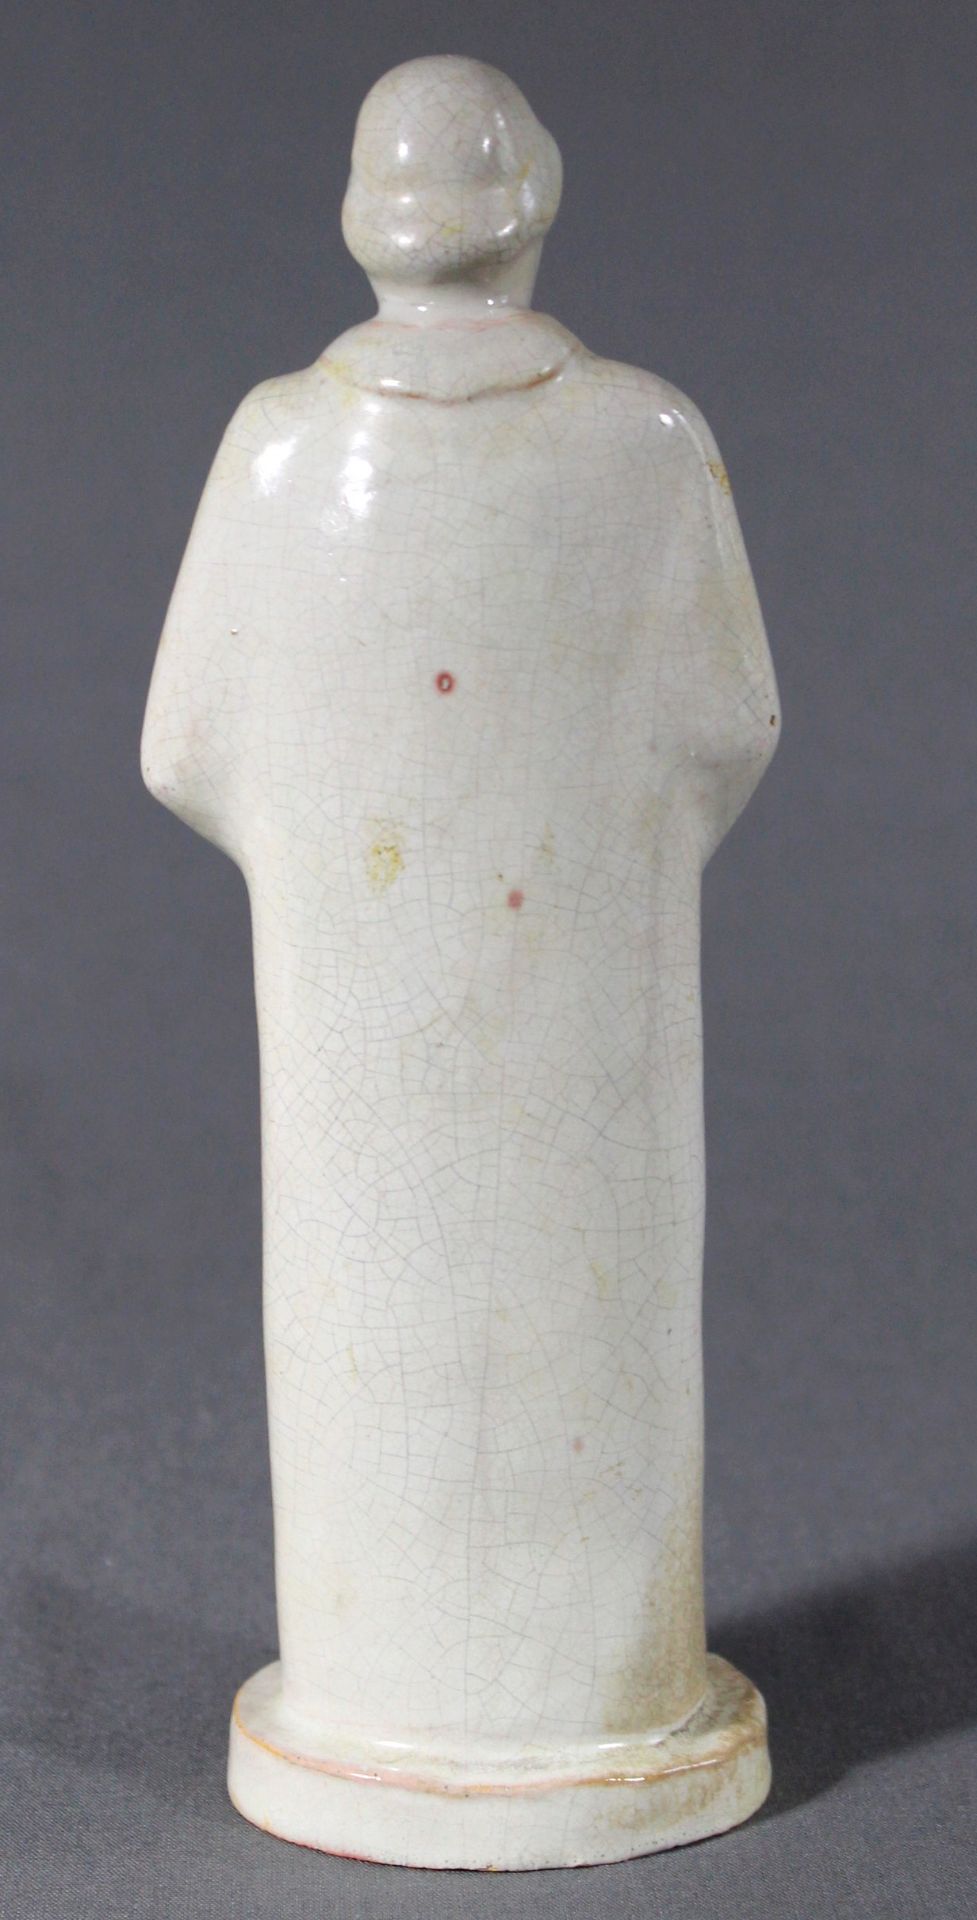 1 Keramikfigur auf Rundsockel, Krakeleedekor „Mann“, Boden mit Monogramm TH, Keramiker Josef Hehl - Image 2 of 2